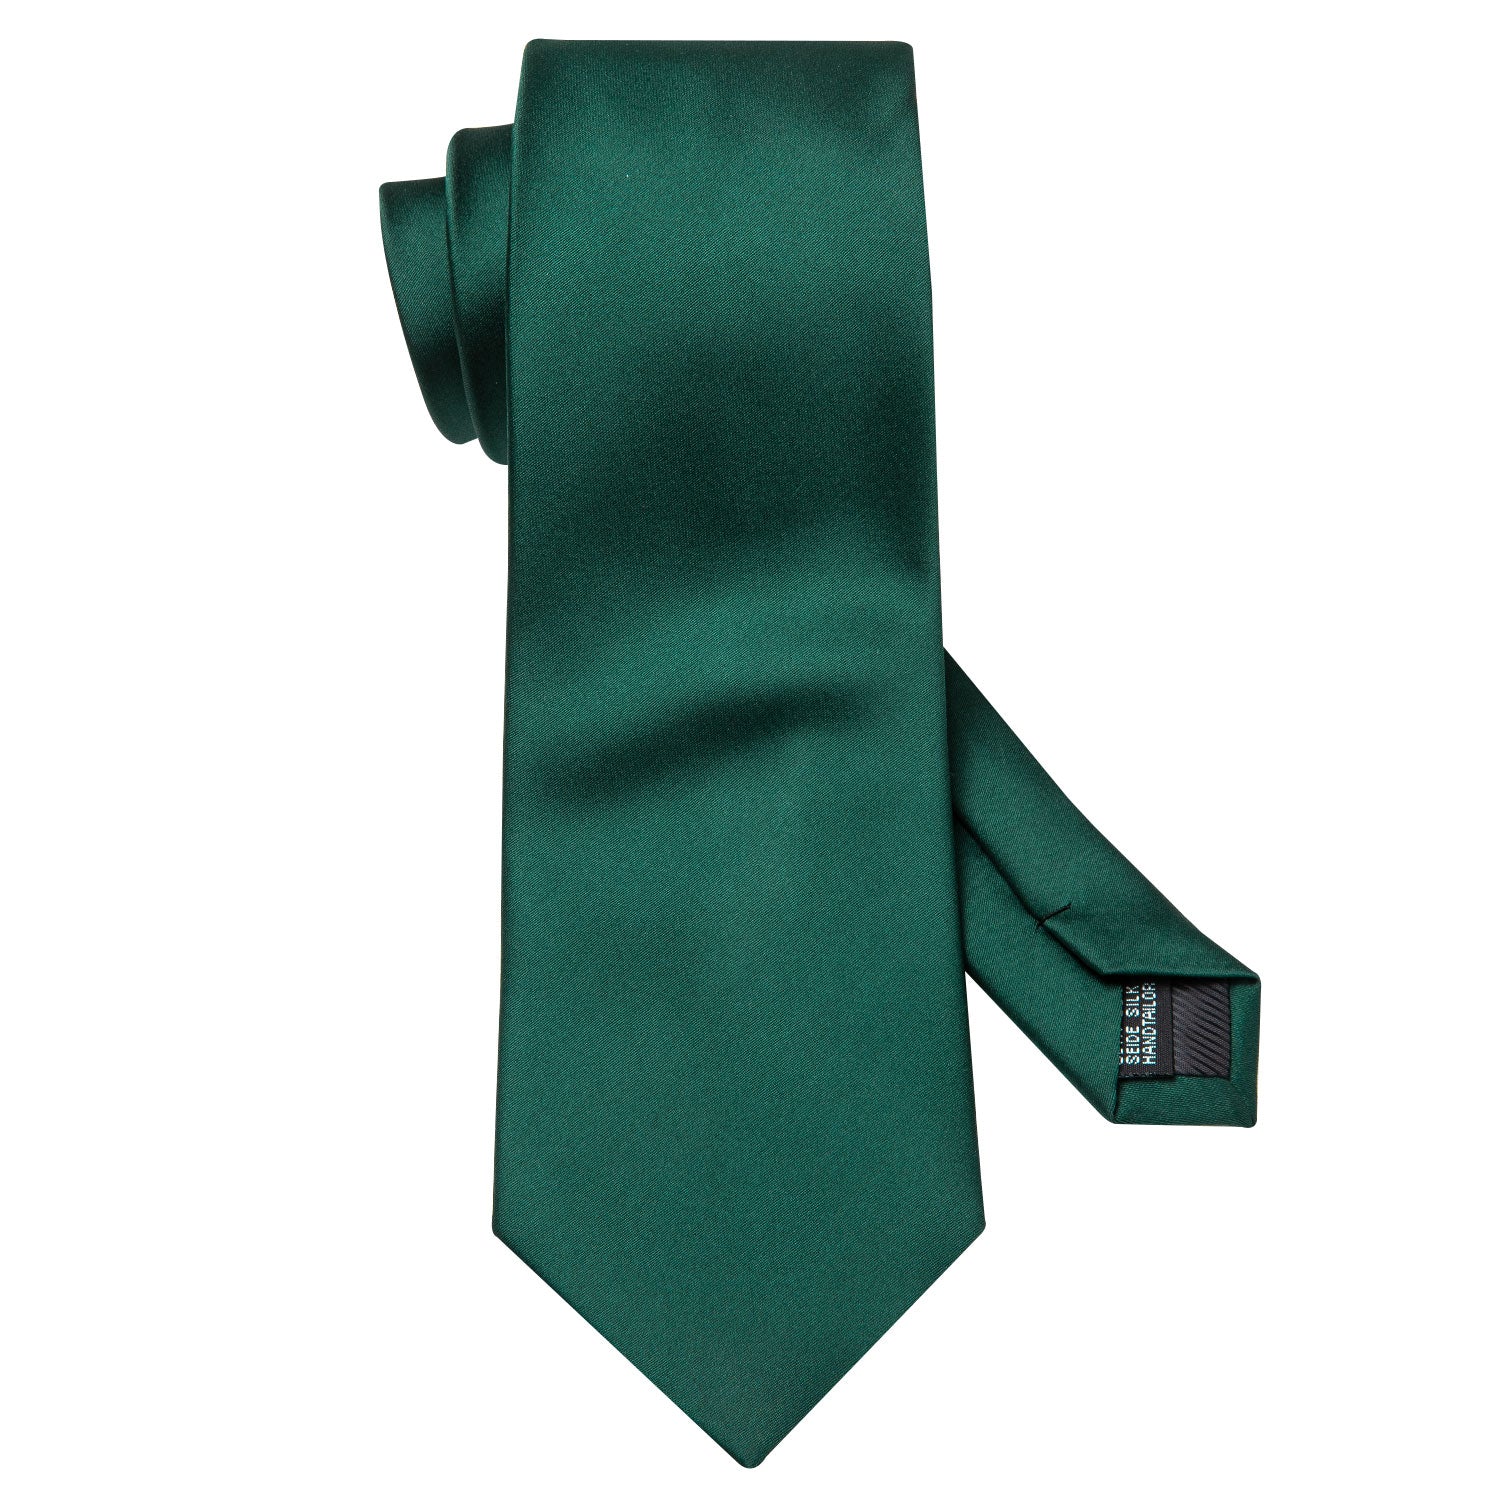 Barry Wang Green Tie Silk Men's Tie Pocket Square Cufflinks Set